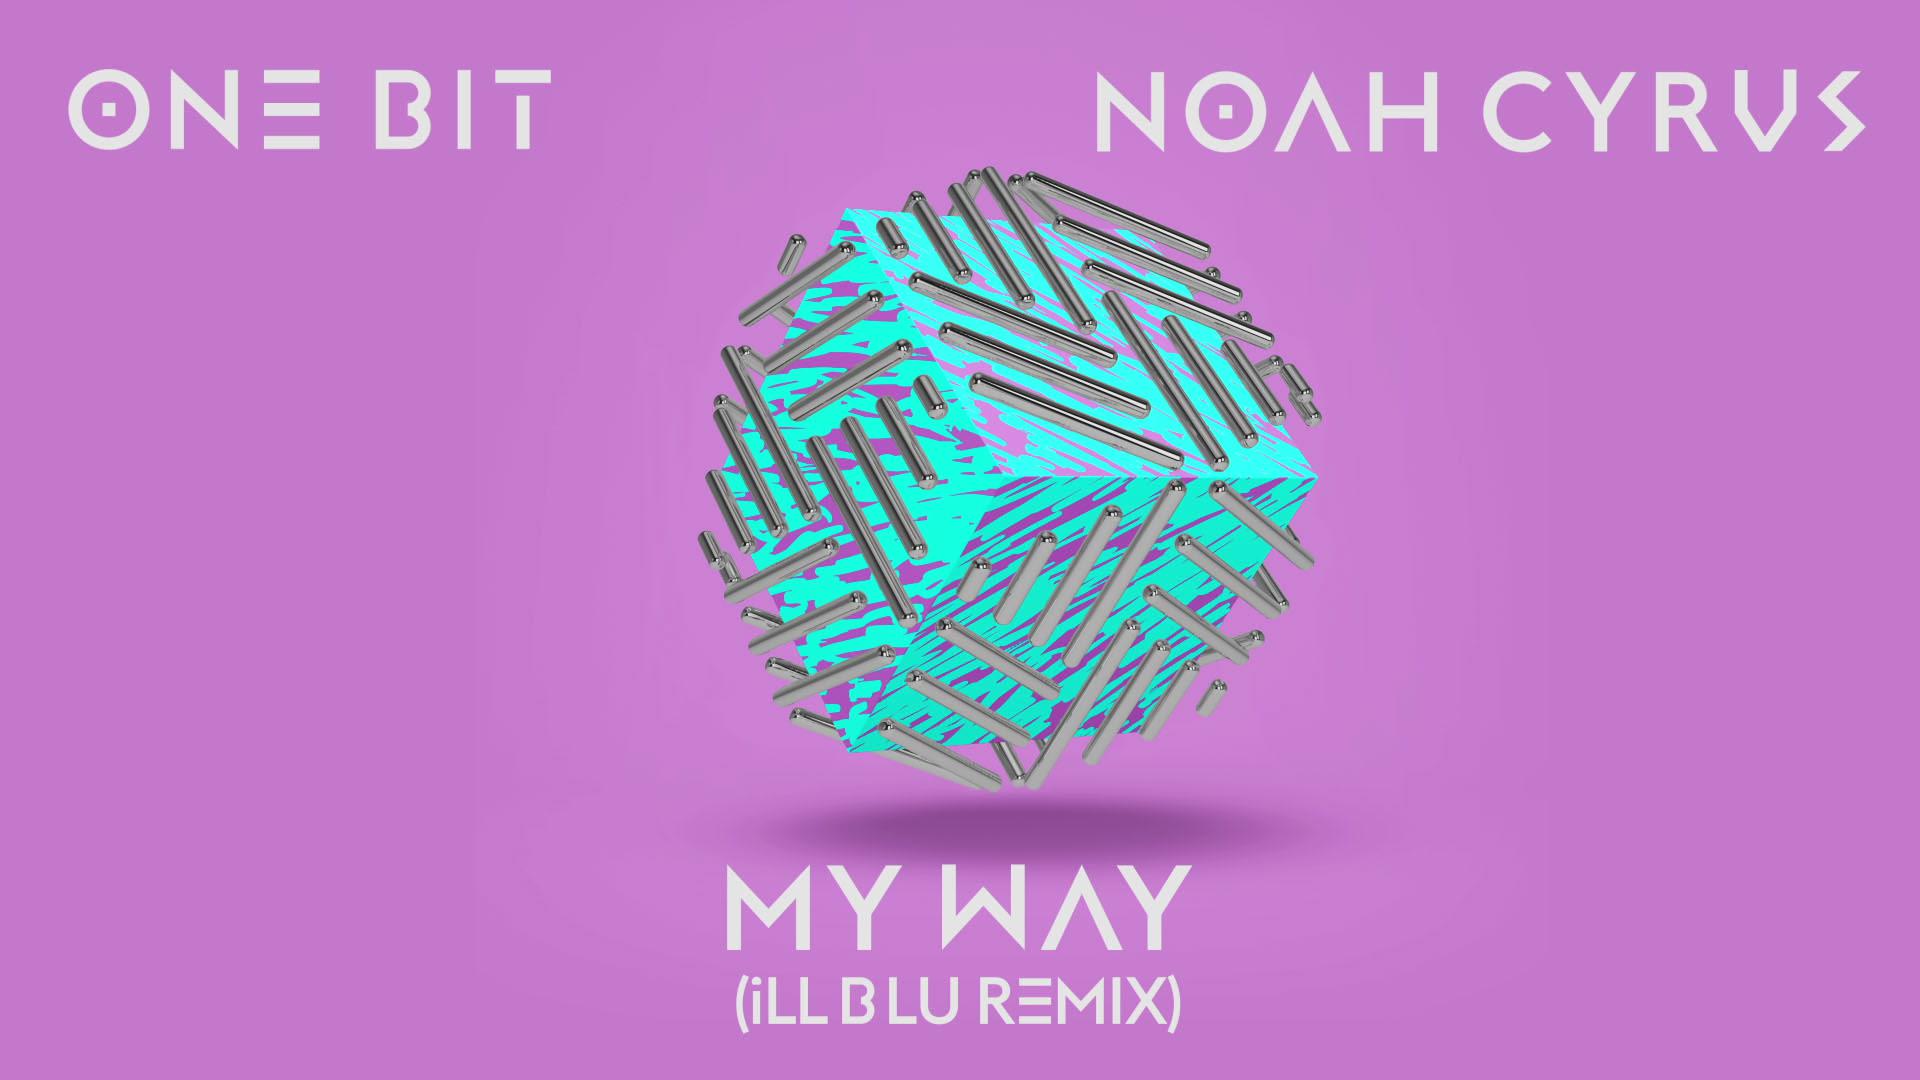 One Bit - My Way (iLL BLU Remix) (Audio)